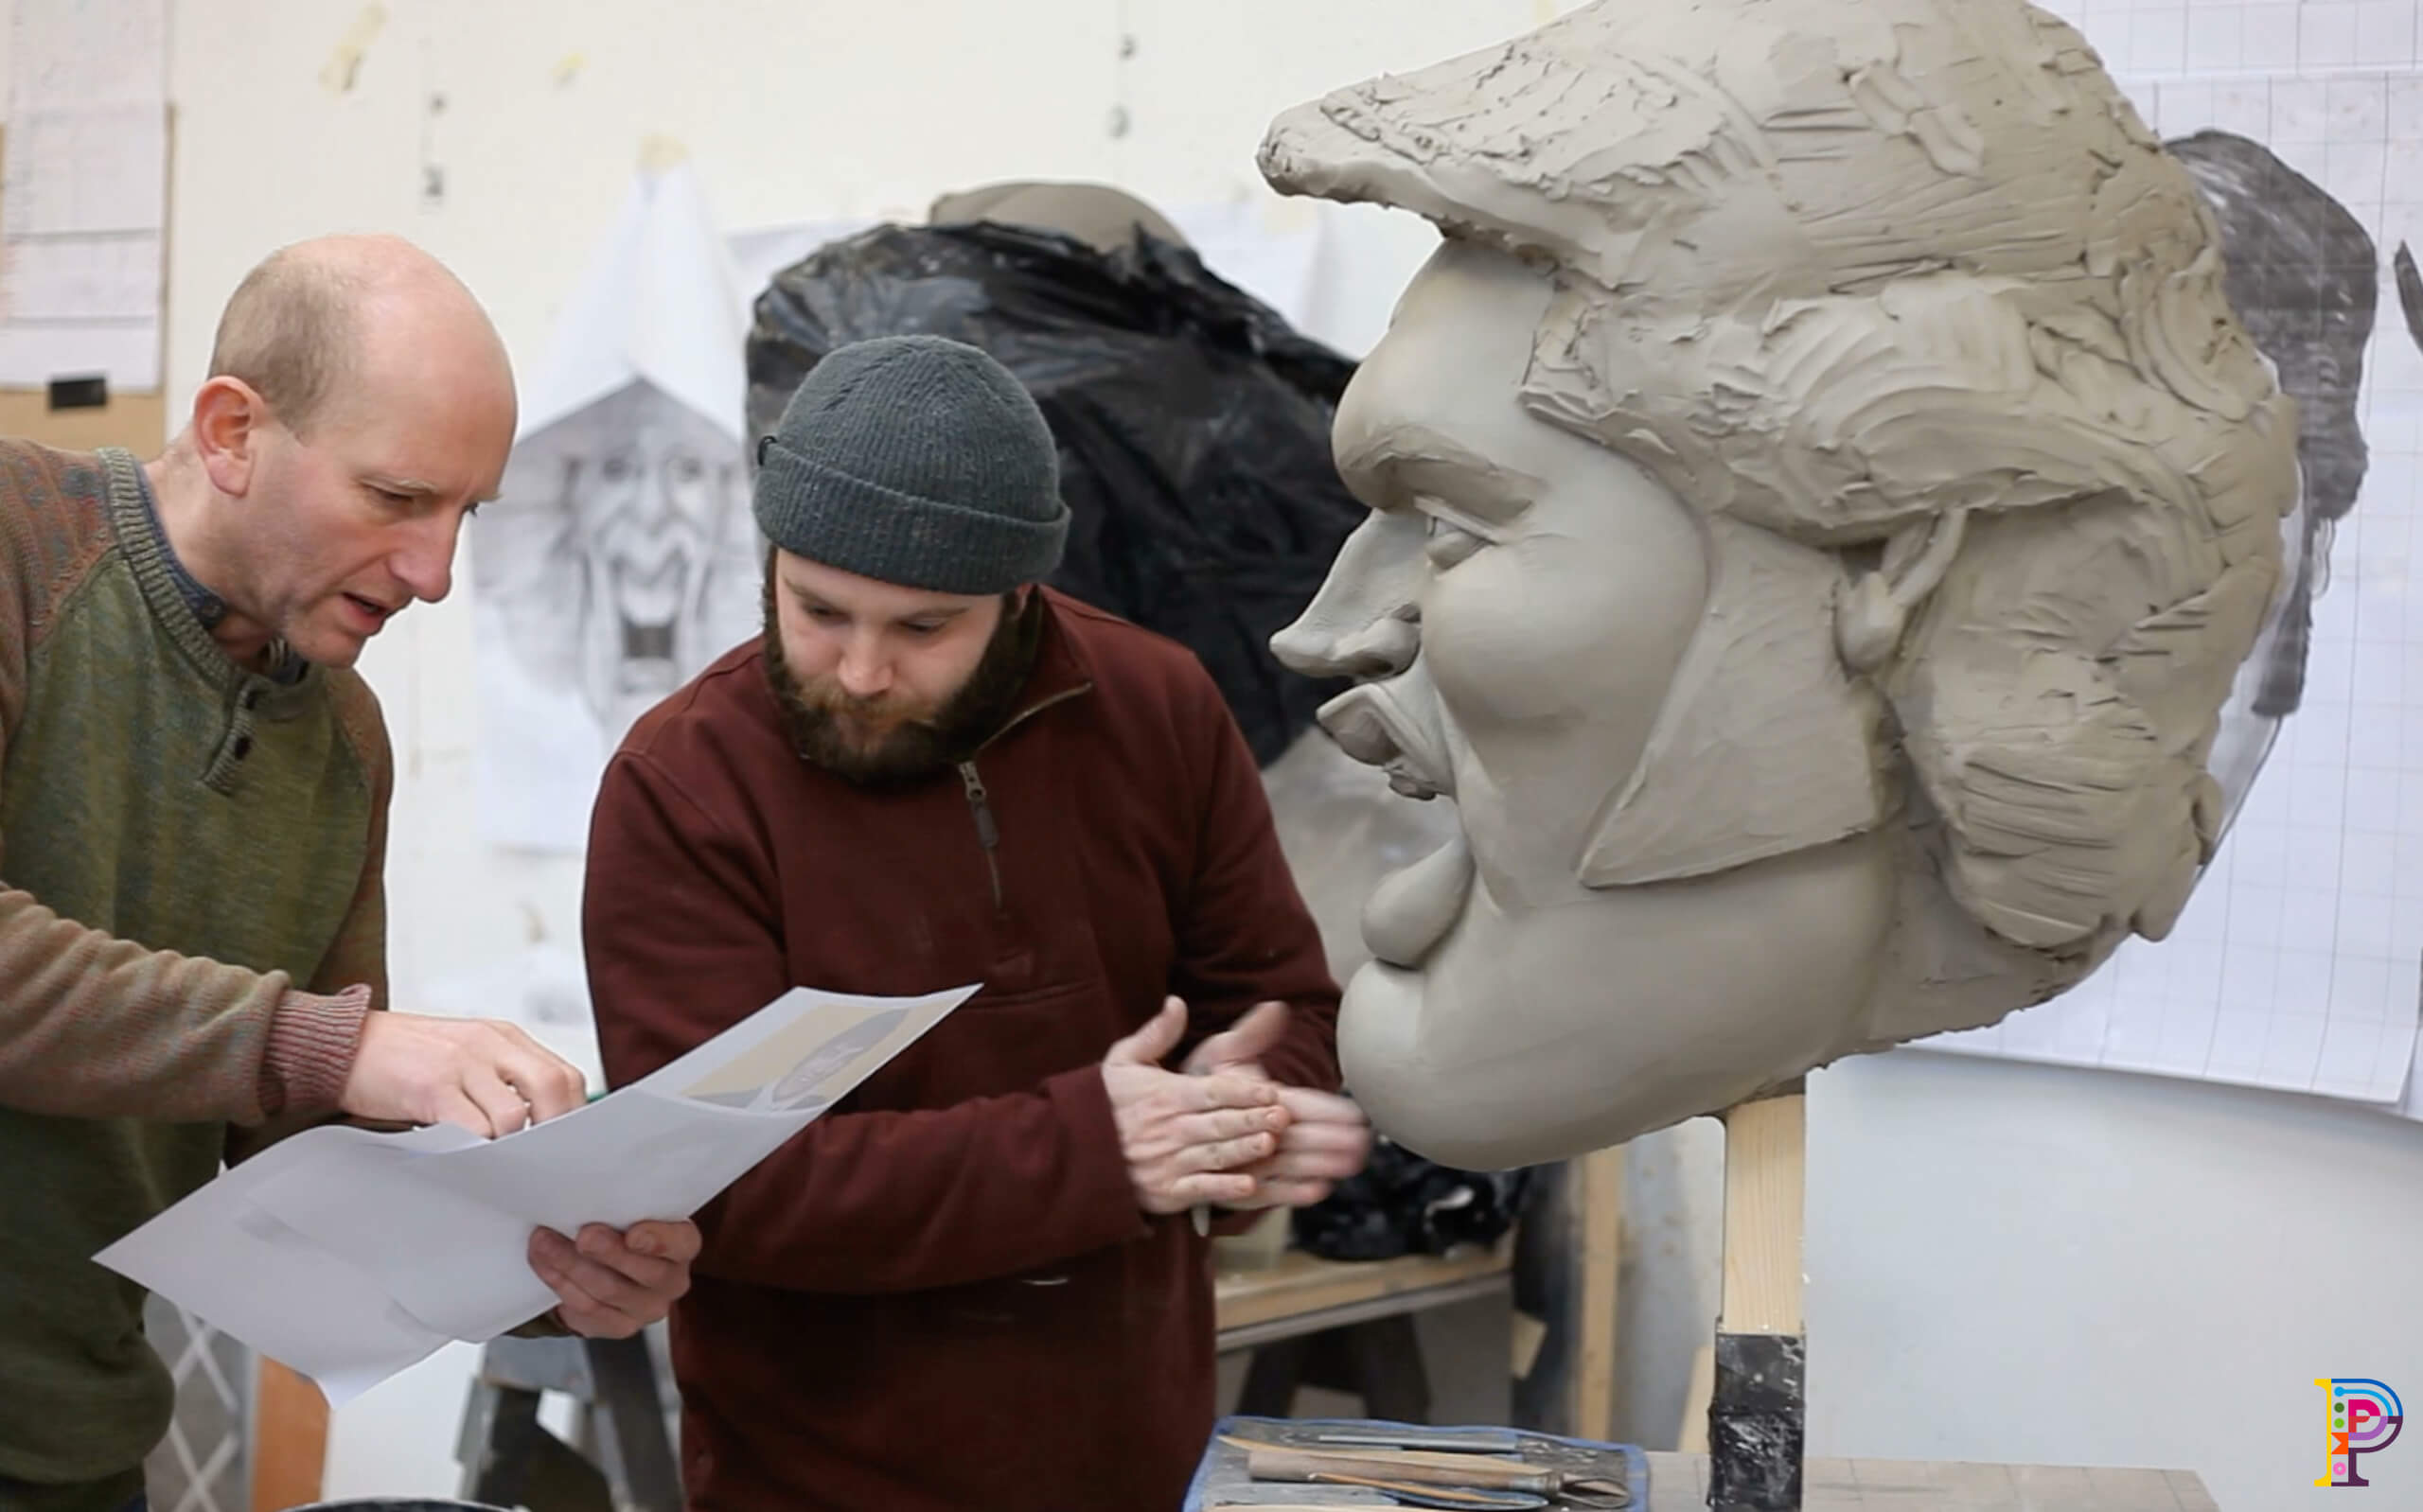 Plunge creationsprop makingitv big heads based in portsladesussexgiant head sculptures